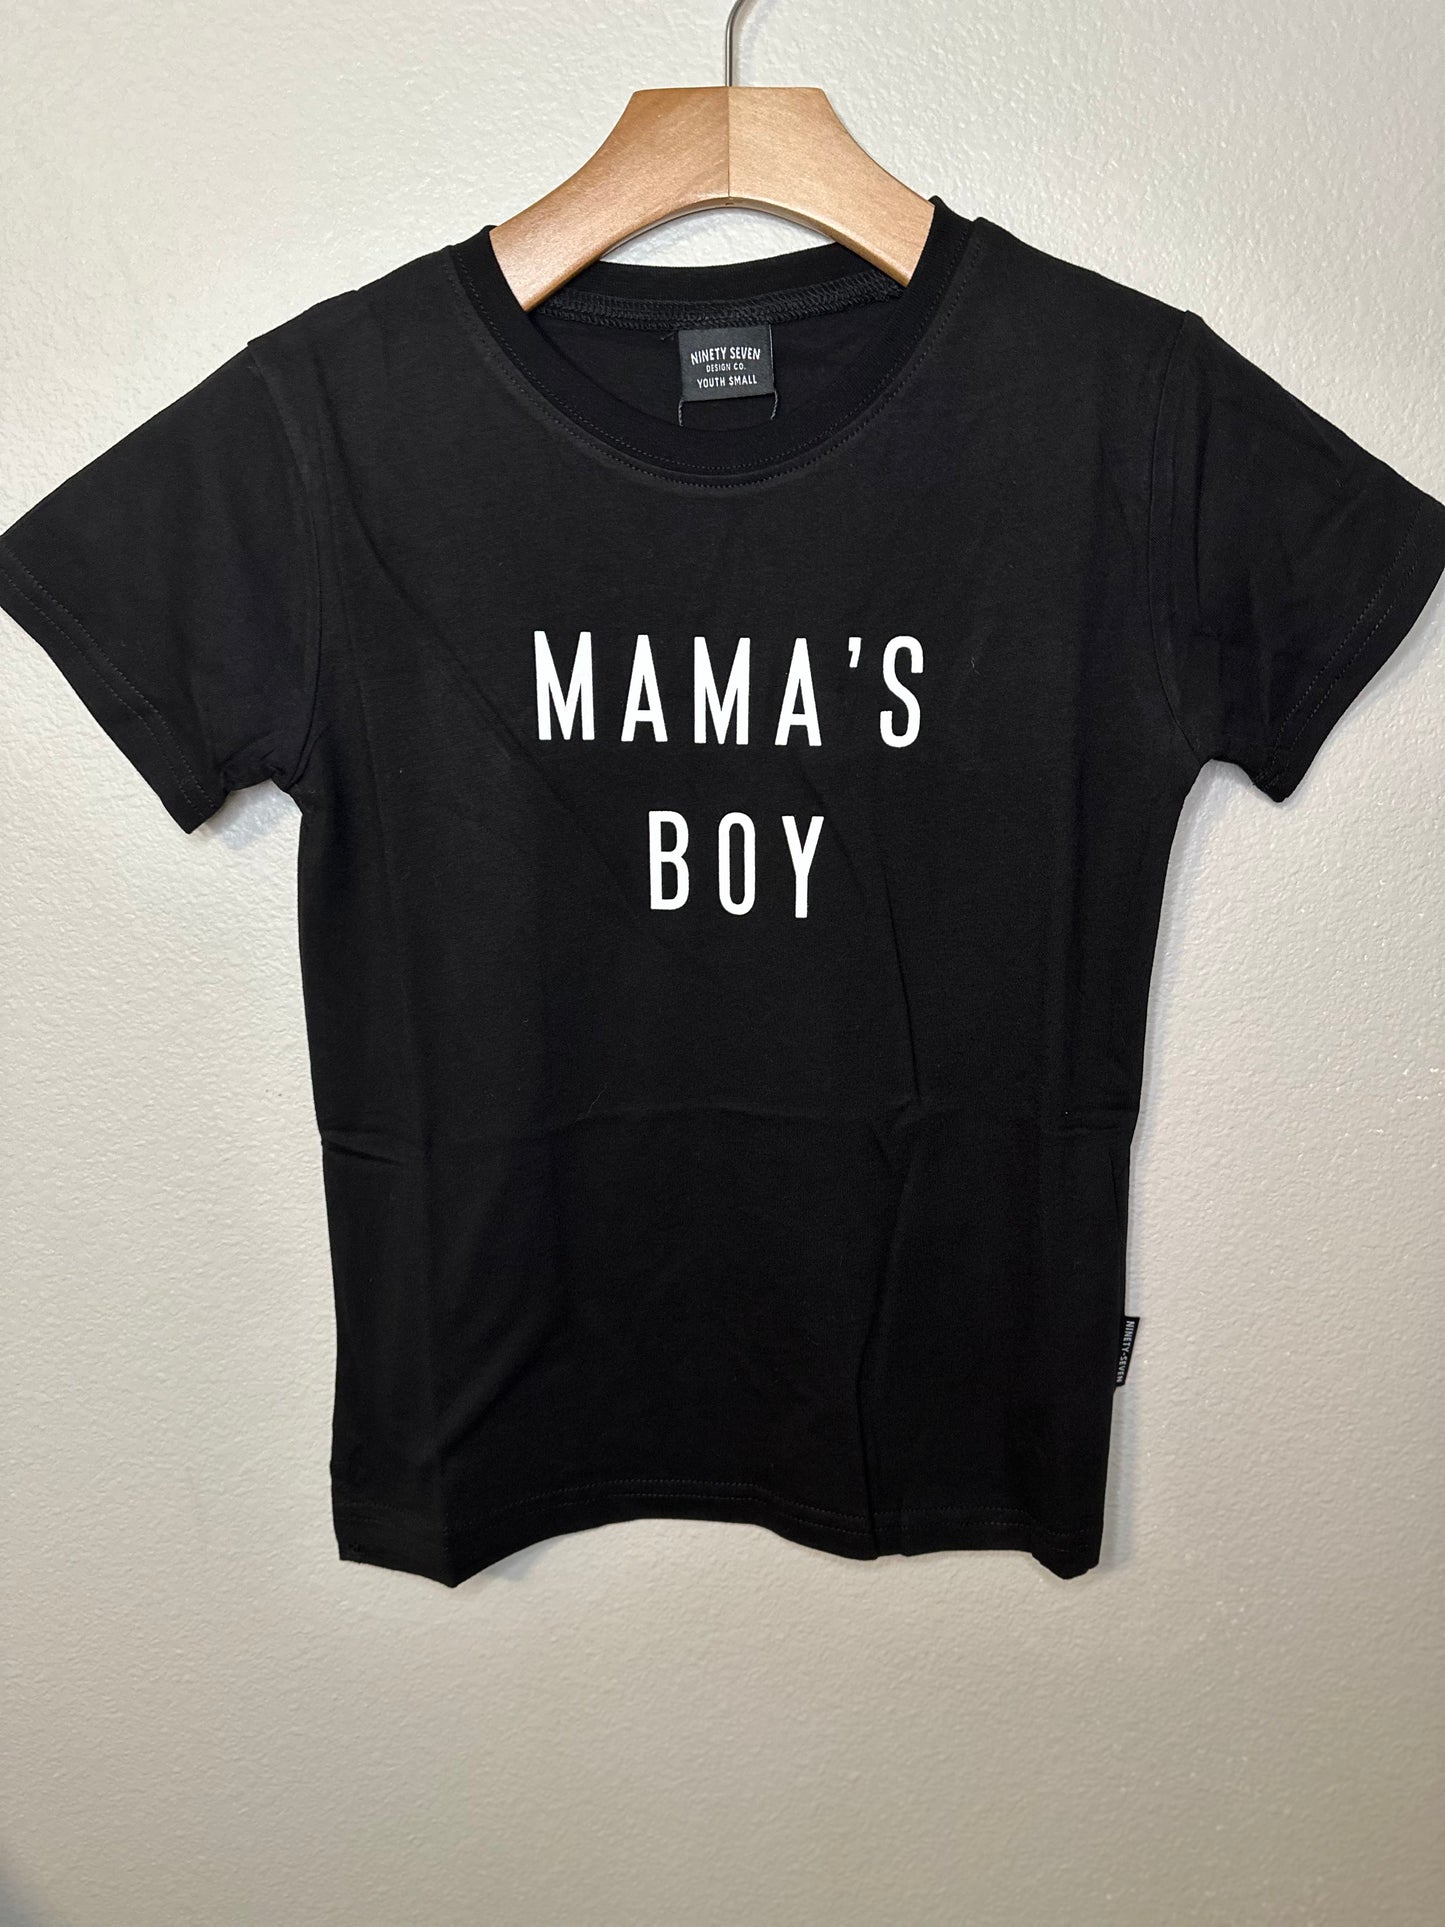 Mama's Boy - Black Kids Tee